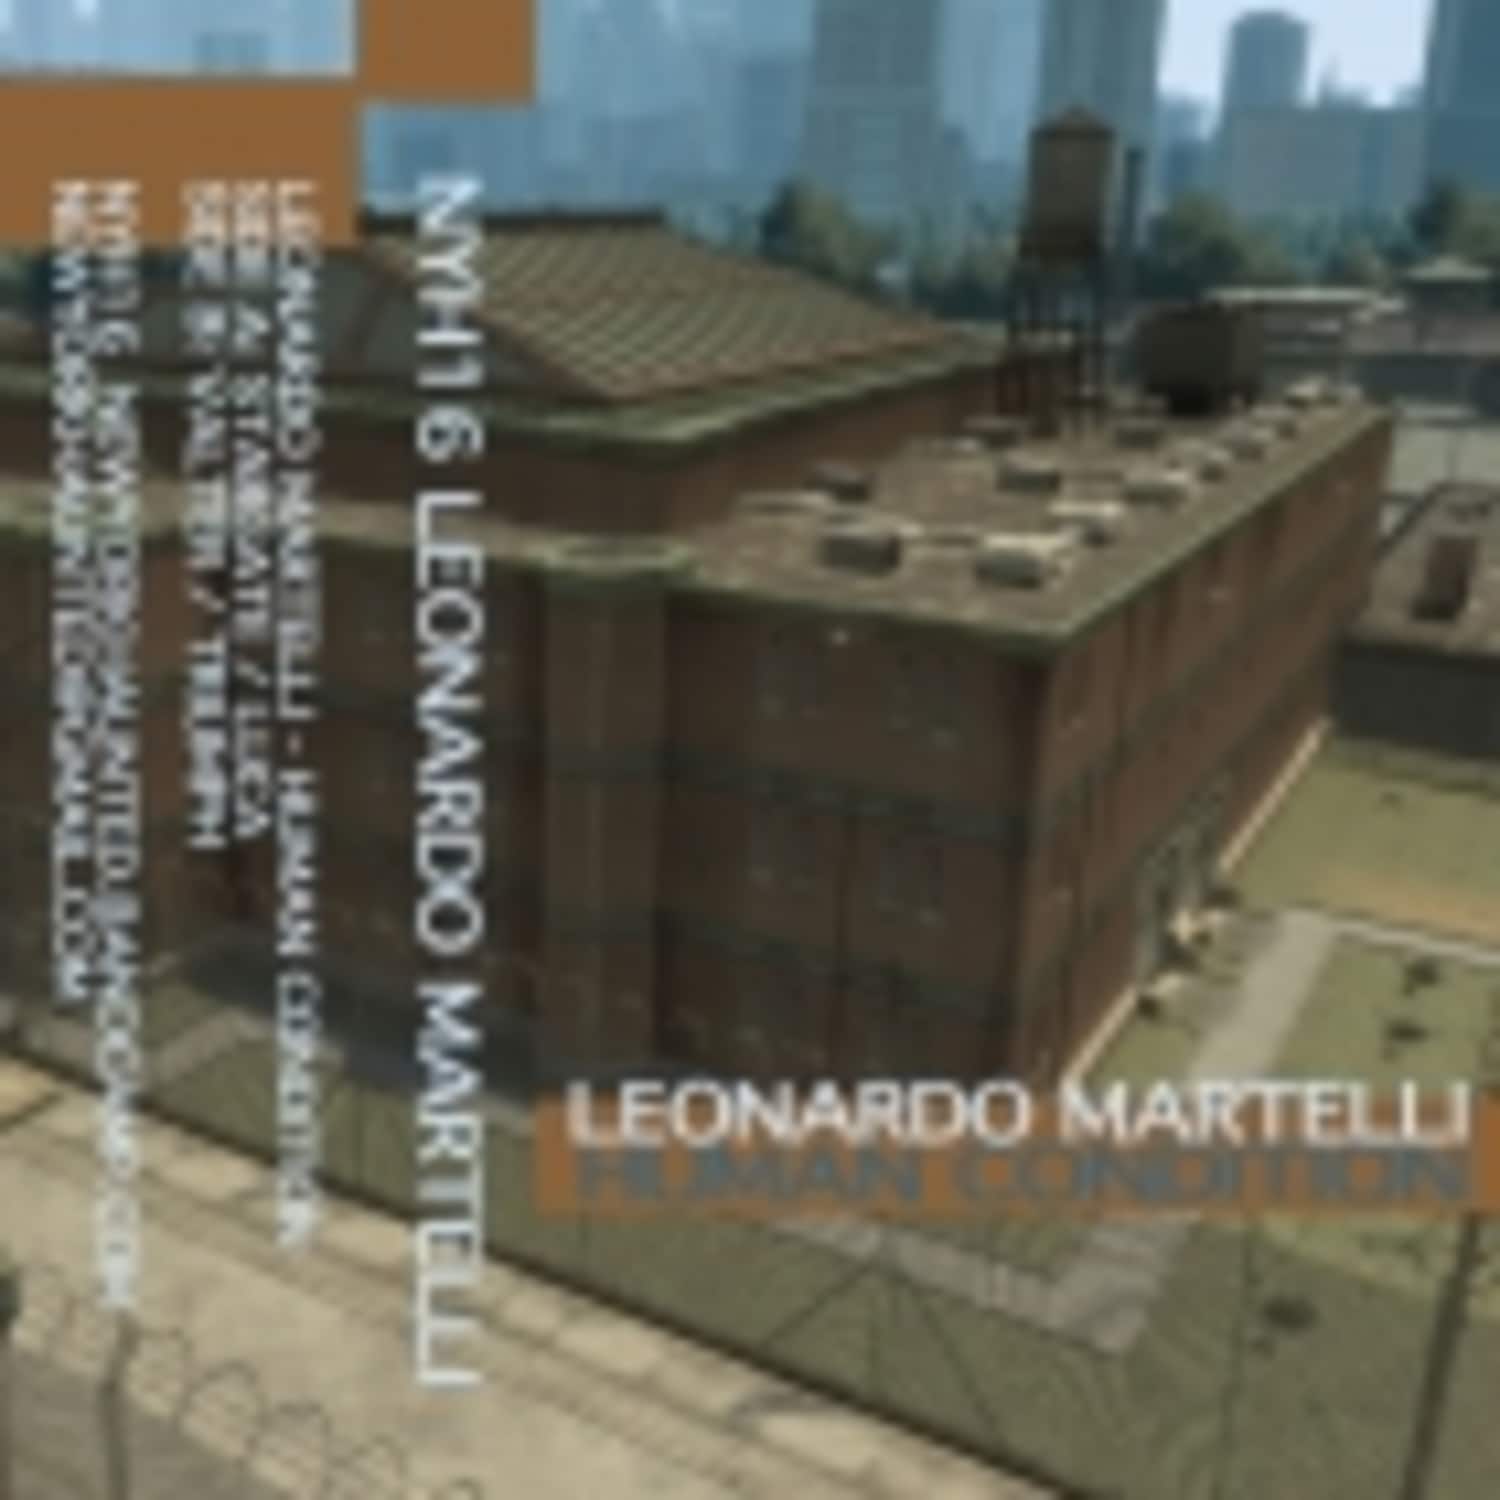 Leonardo Martelli - HUMAN CONDITION 